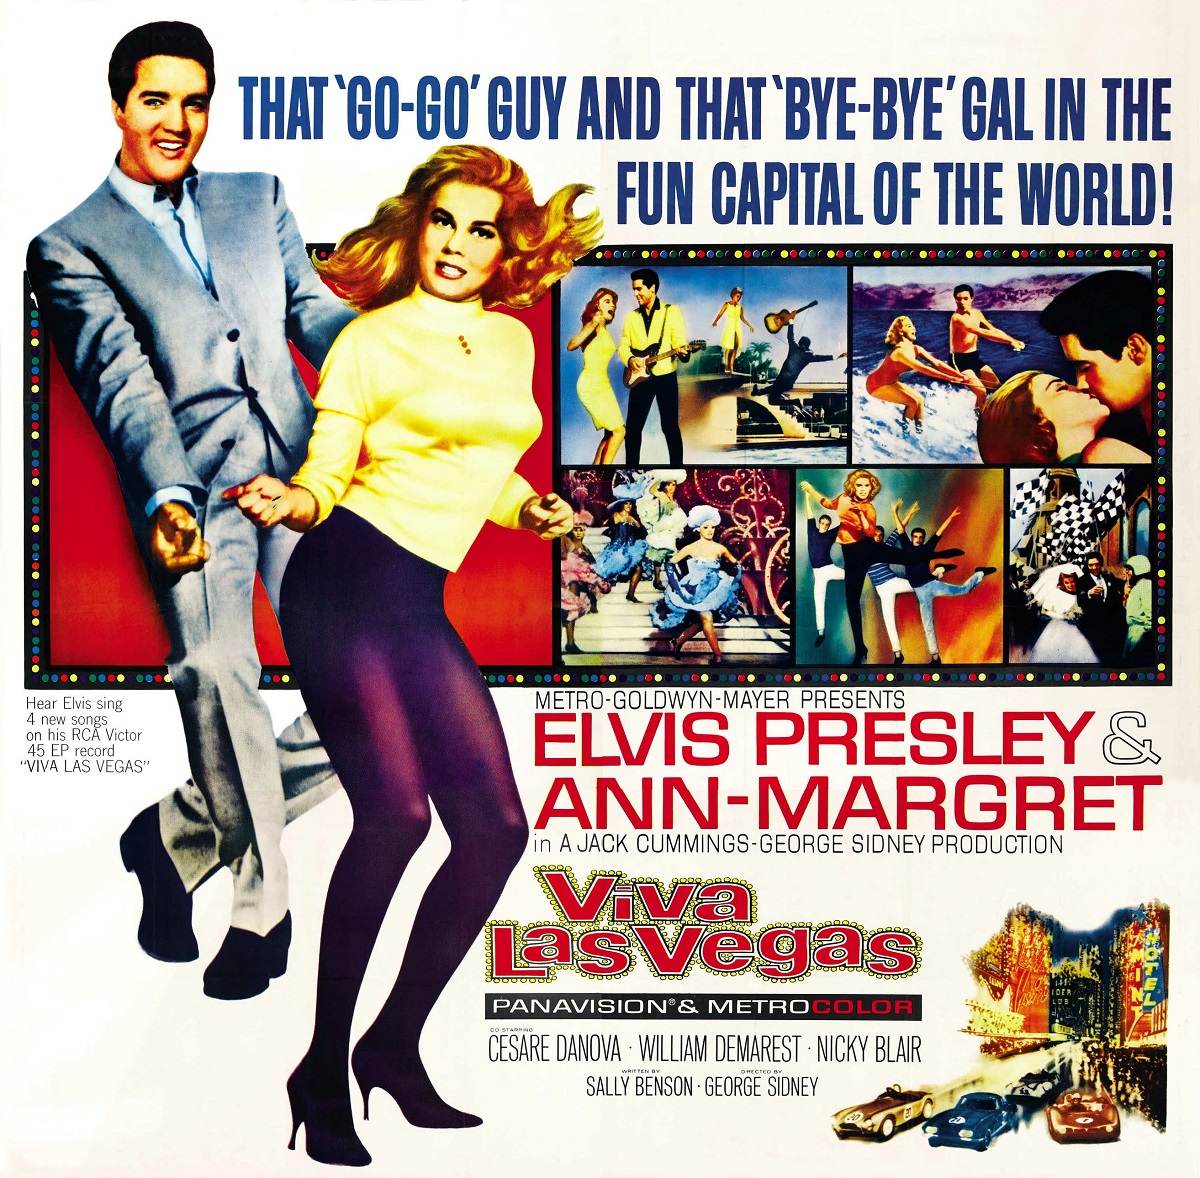 'Viva Las Vegas' poster featuring Ann-Margret and Elvis Presley